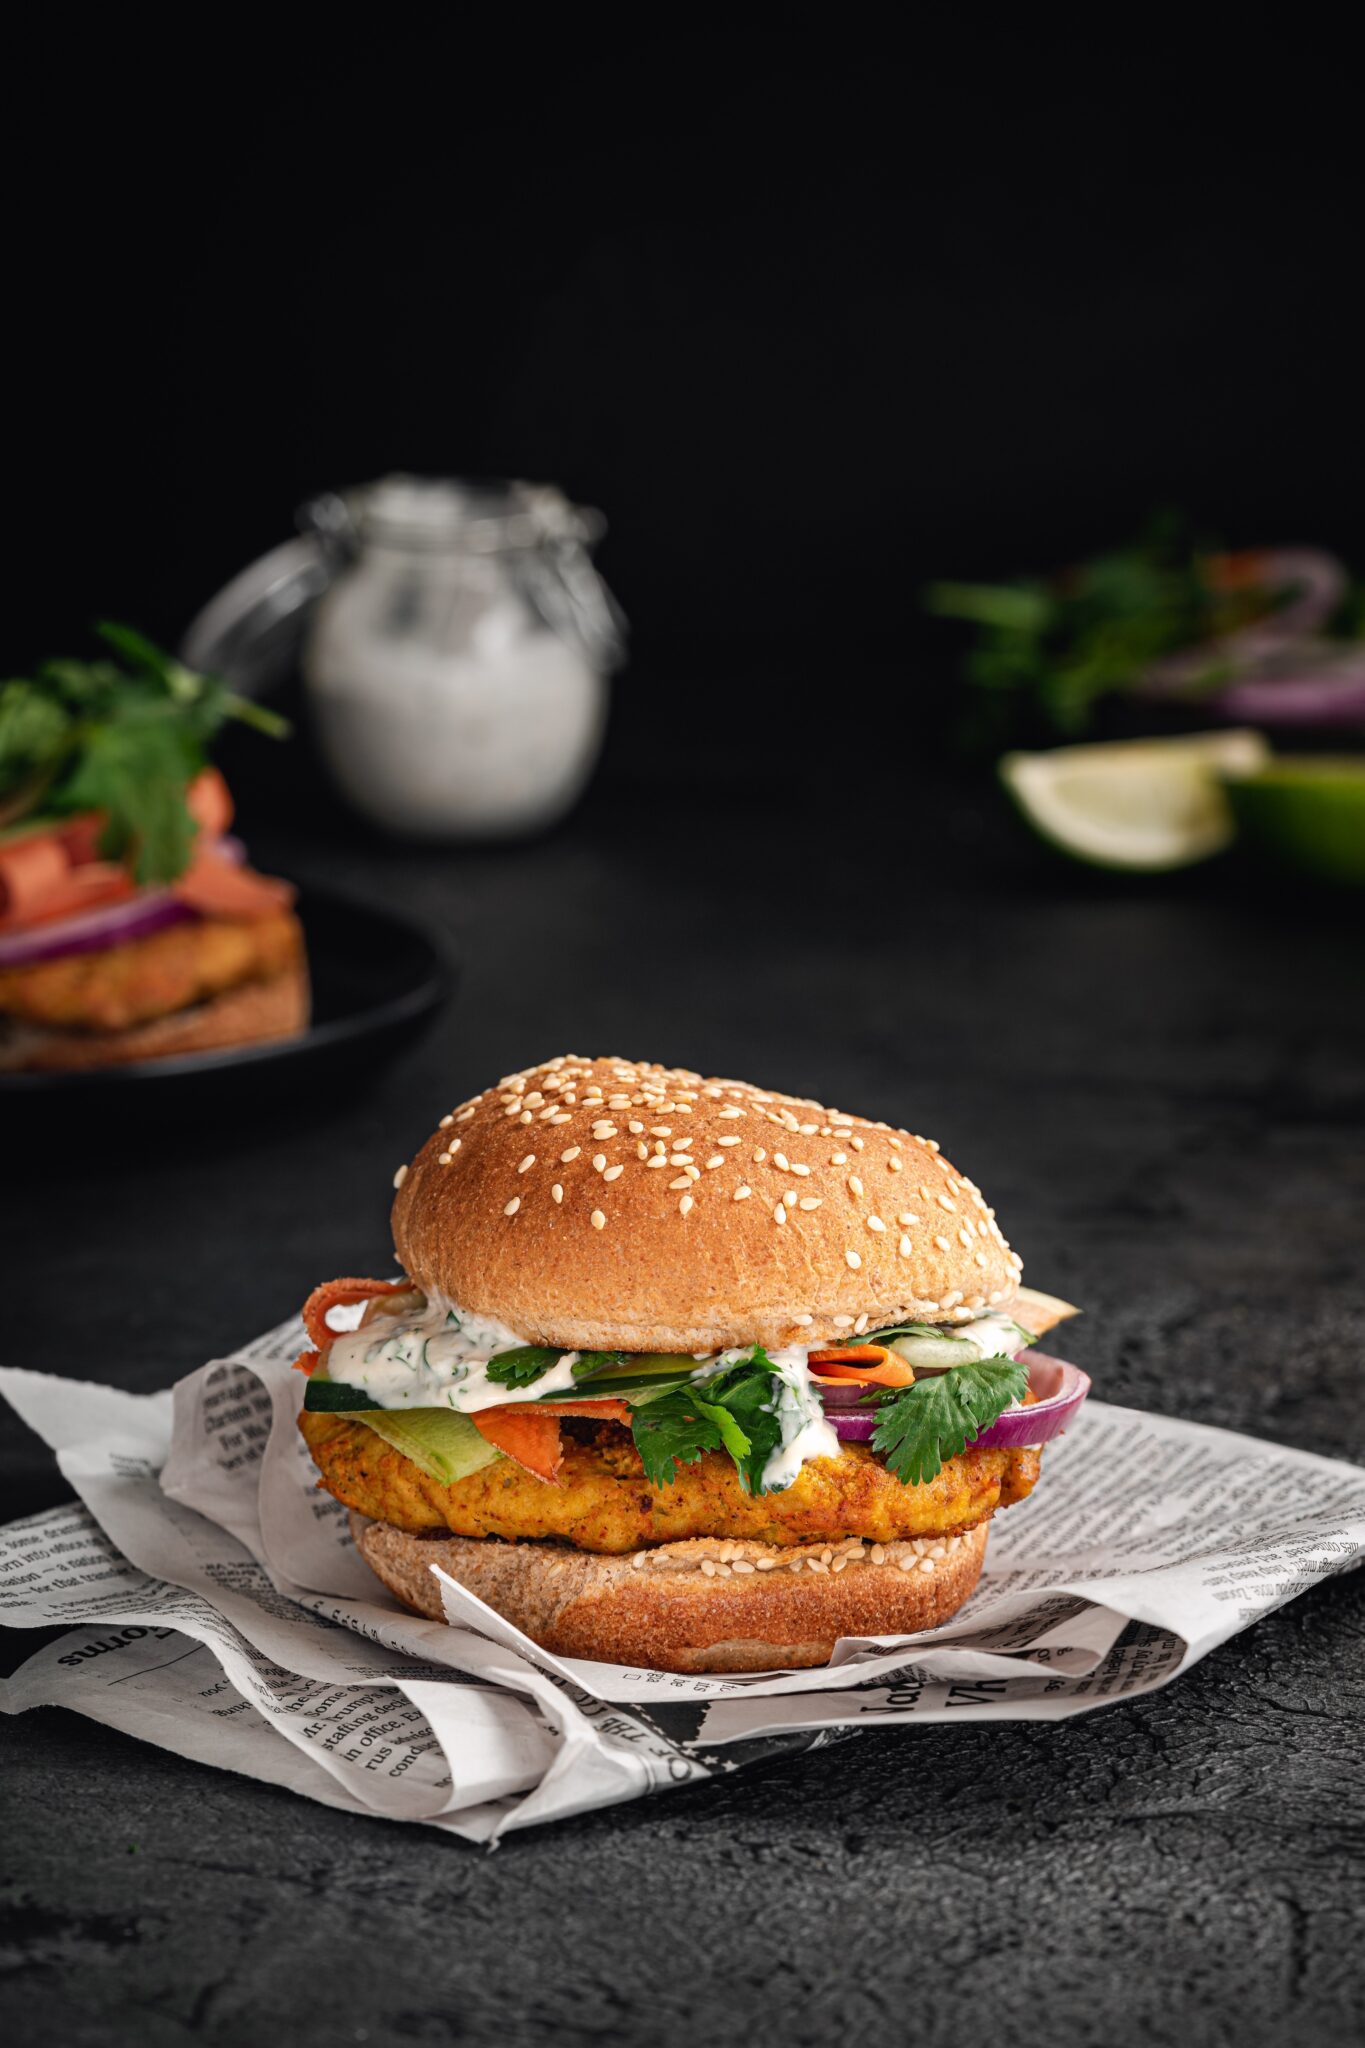 tandoori chicken sandwich with fresh veggies and sauce